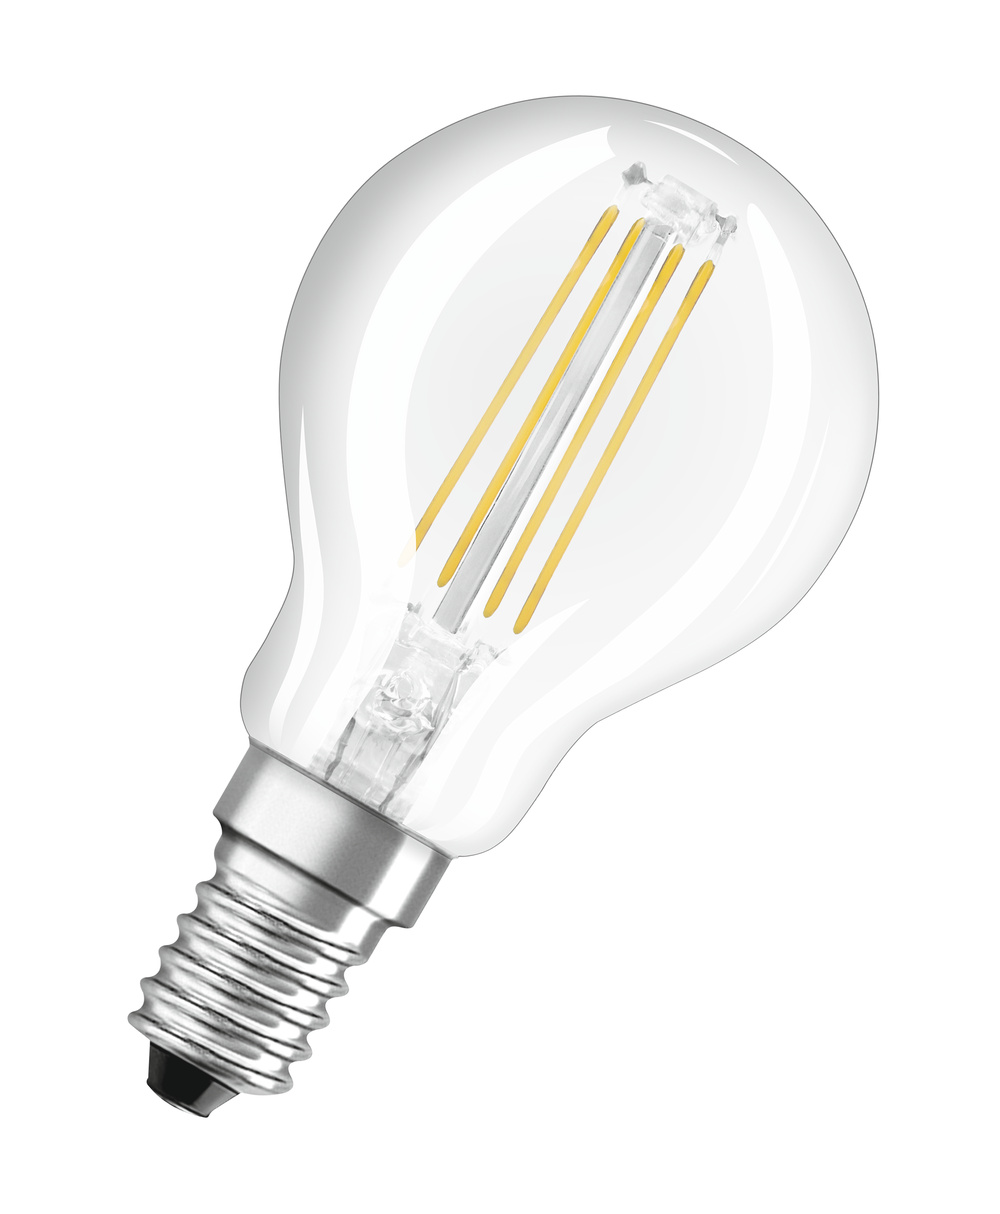 Ledvance LED lamp LED CLASSIC P P 5.5W 827 FIL CL E14 – 4099854062223 – replacement for 60 W